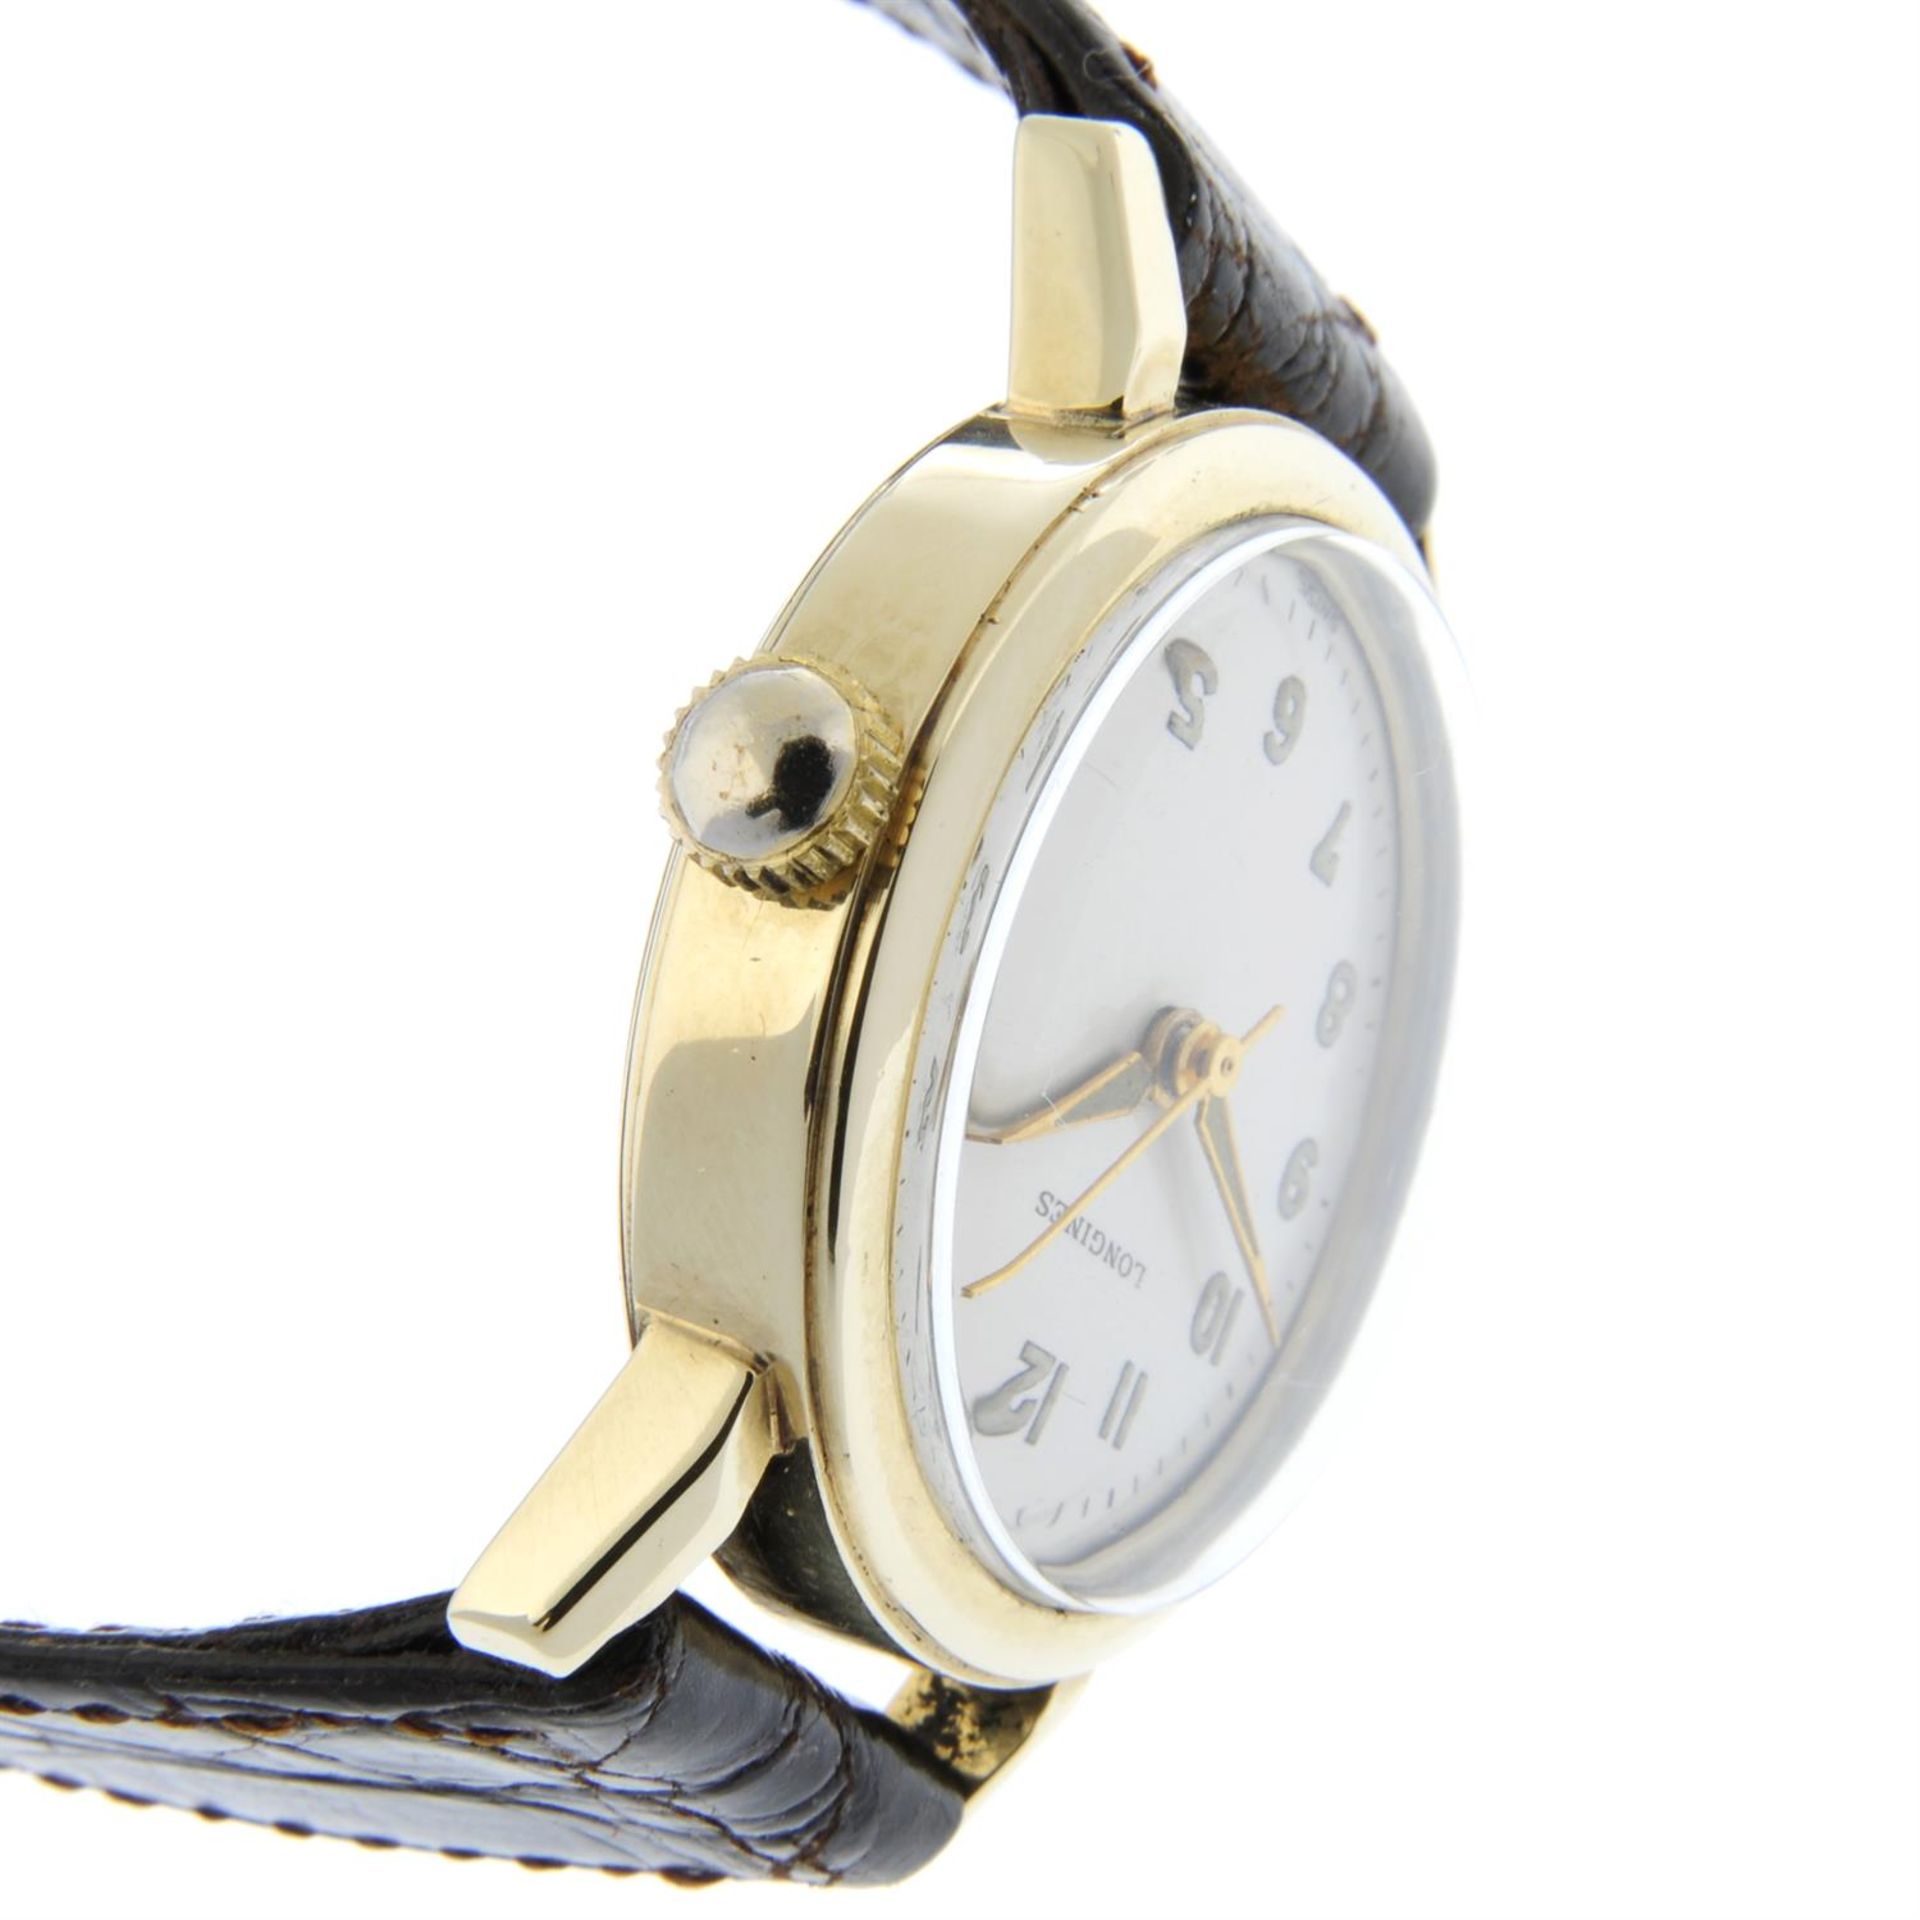 LONGINES - a yellow metal wrist watch, 29mm. - Image 3 of 4